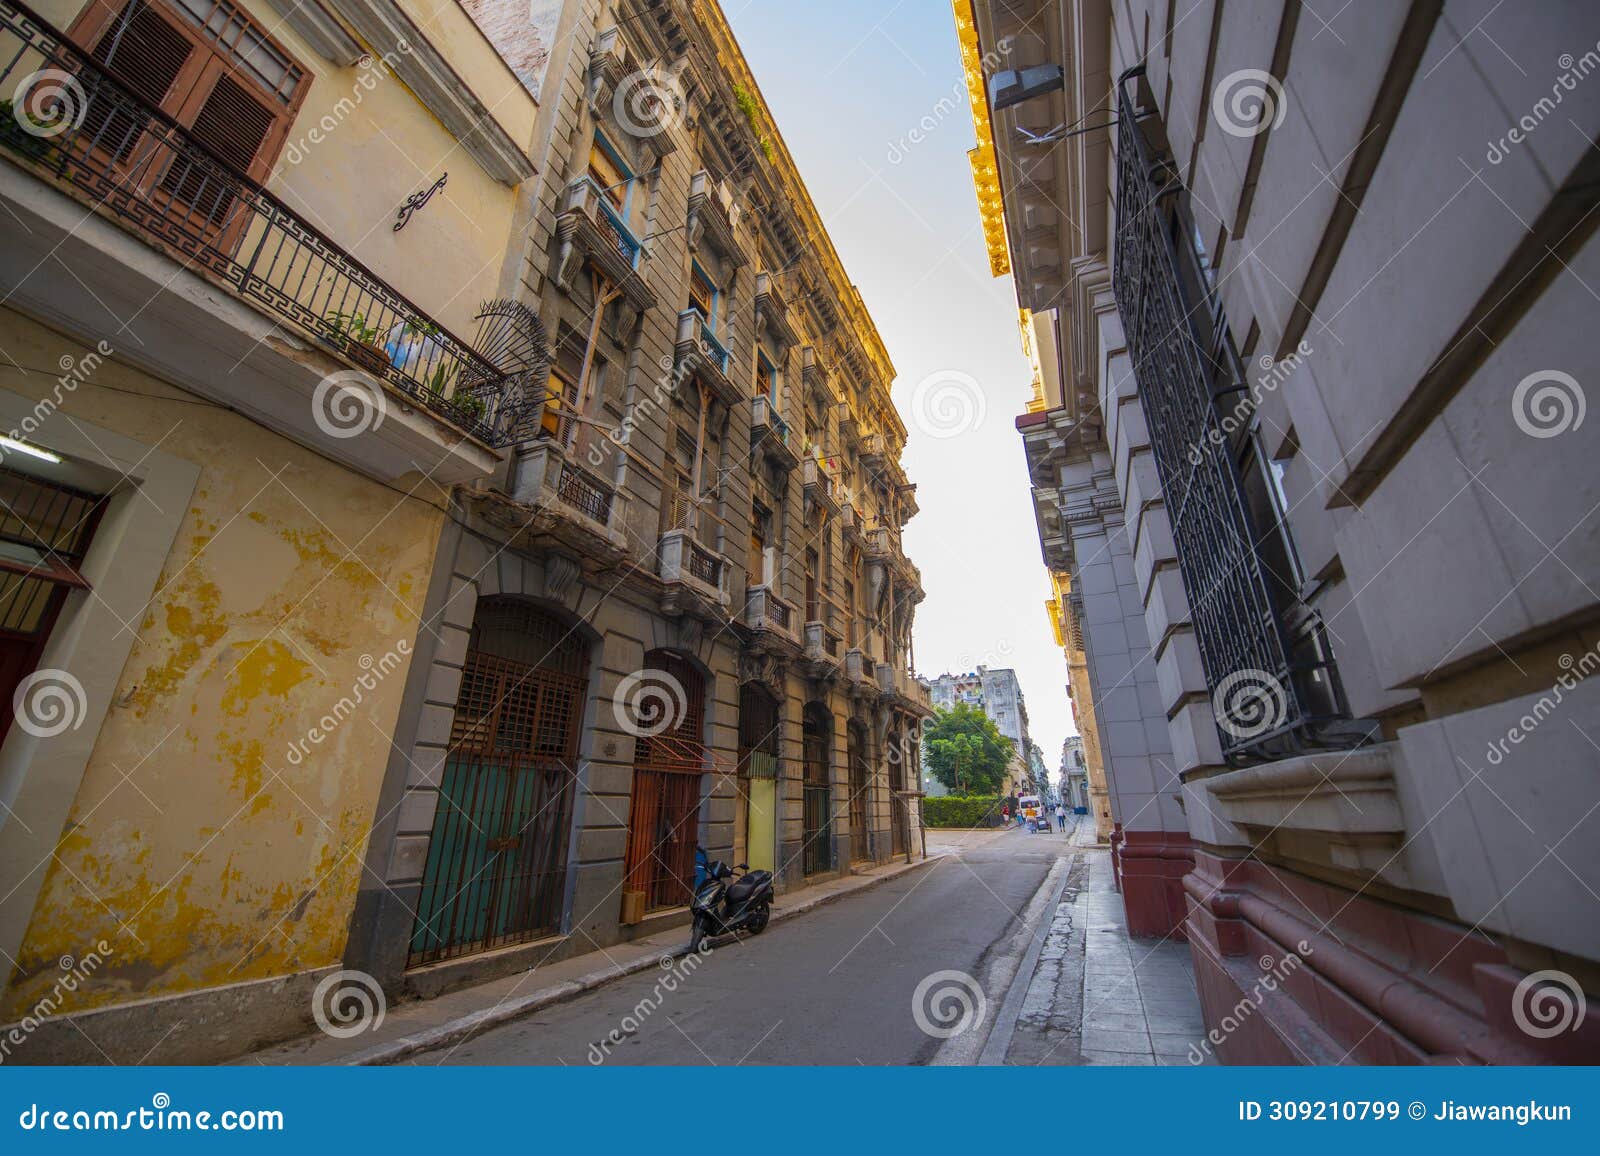 calle cuba street, old havana, havana, cuba